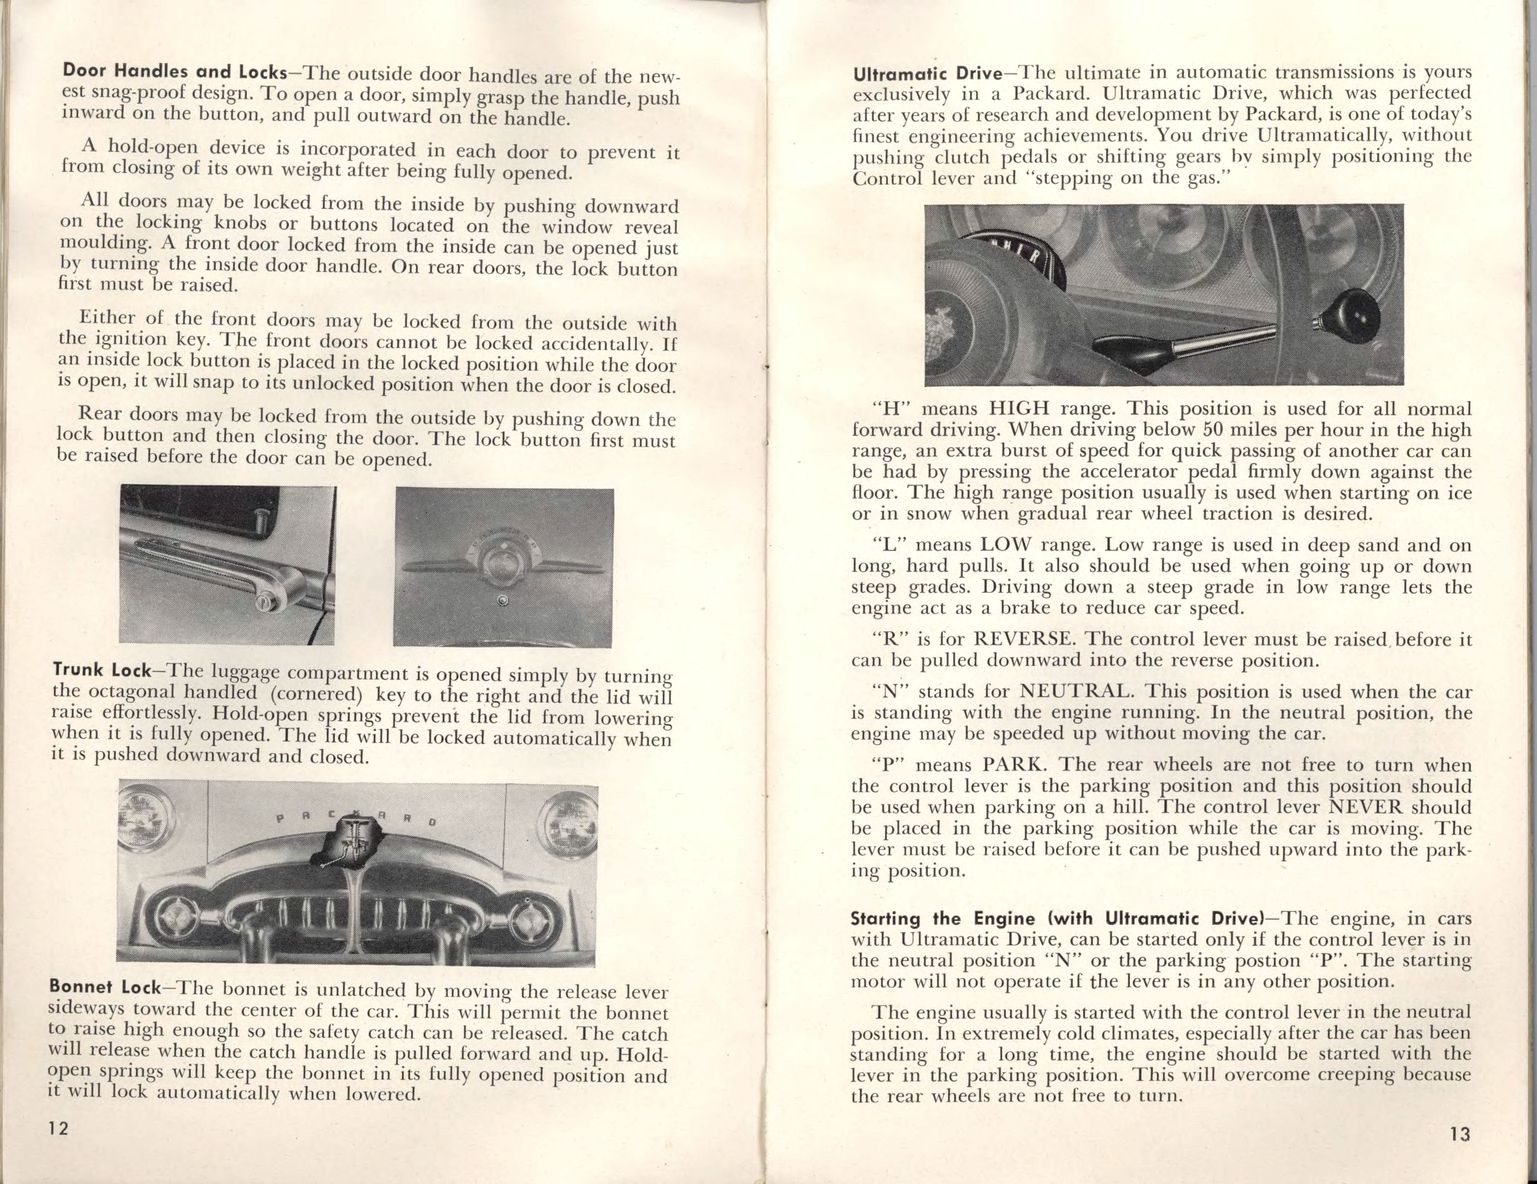 1951_Packard_Manual-12-13